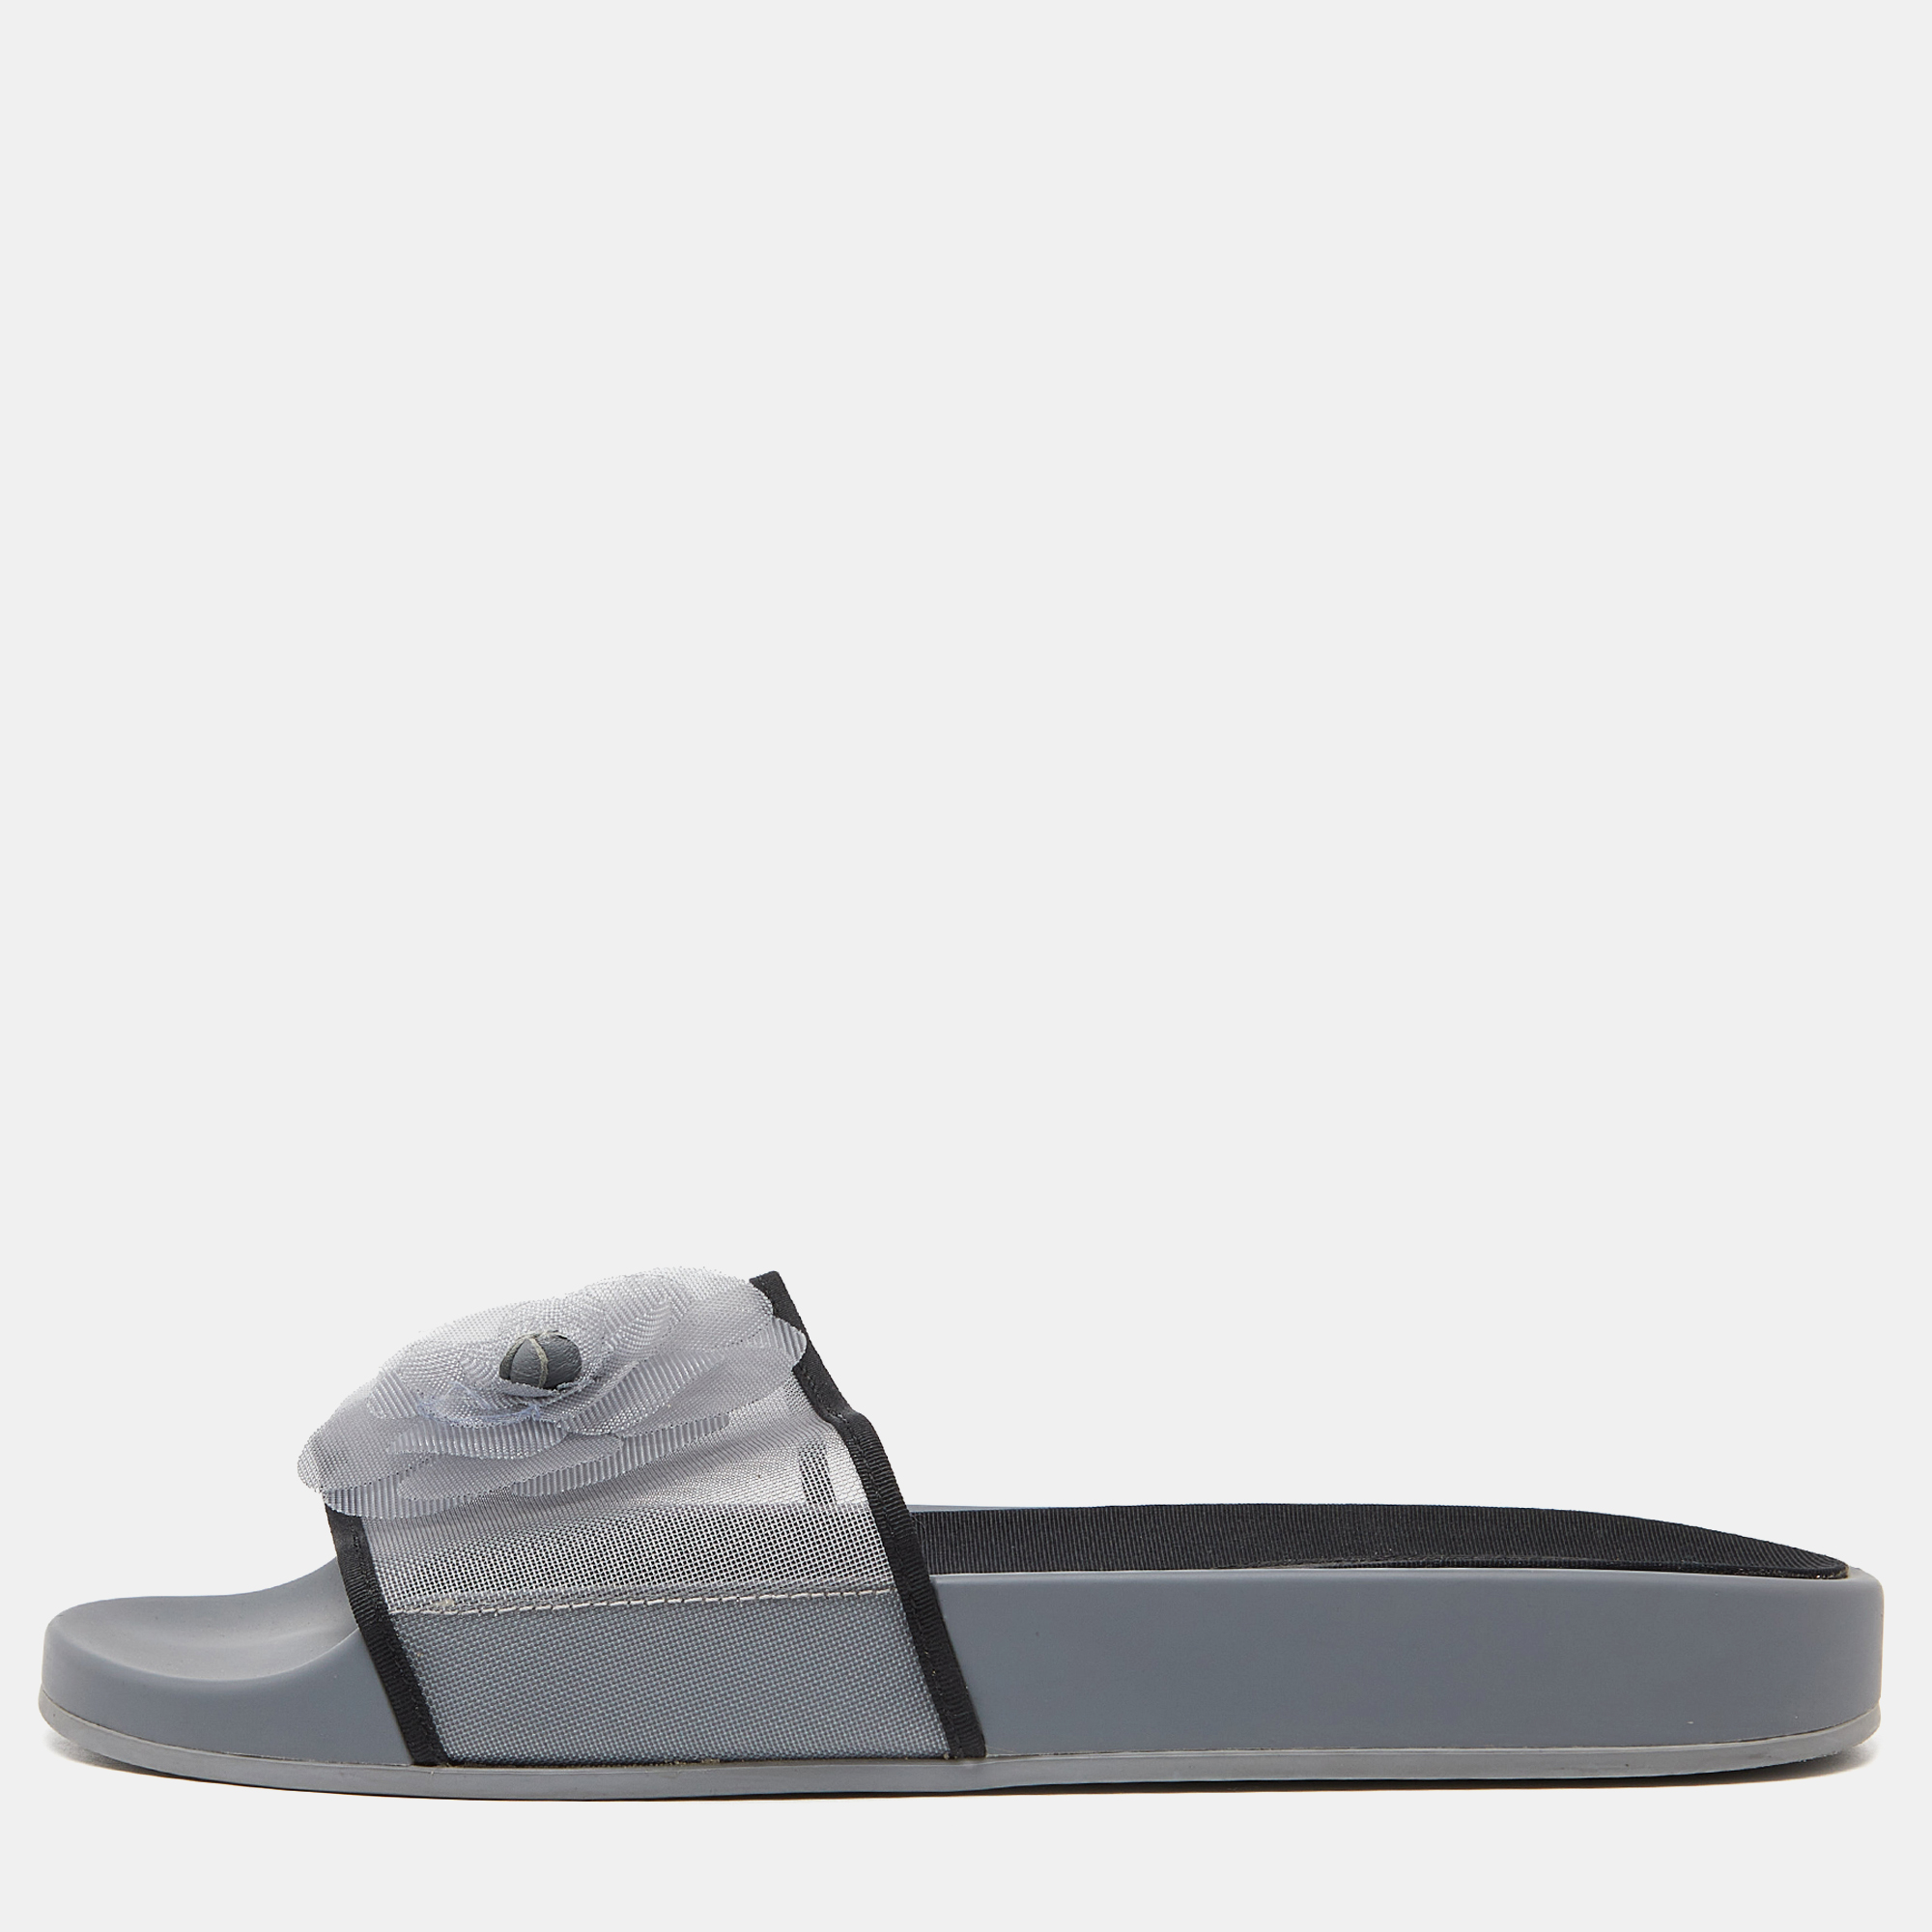 Pre-owned Chanel Grey/black Mesh Camellia Slide Flat Sandals Size 39